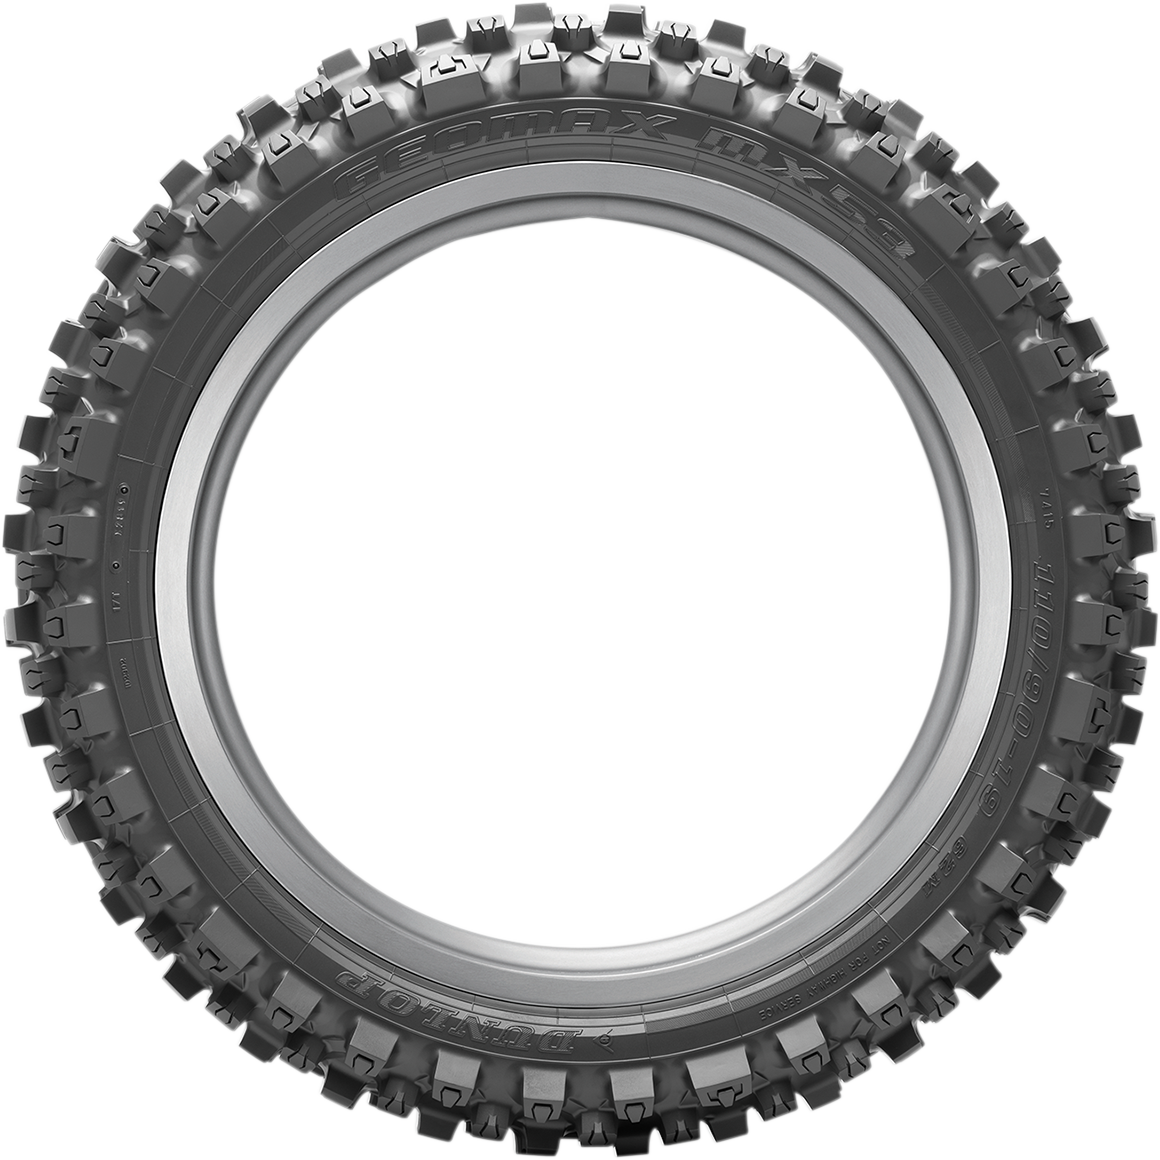 DUNLOP Tire - Geomax MX53* - Rear - 100/90-19 - 57M 45236253